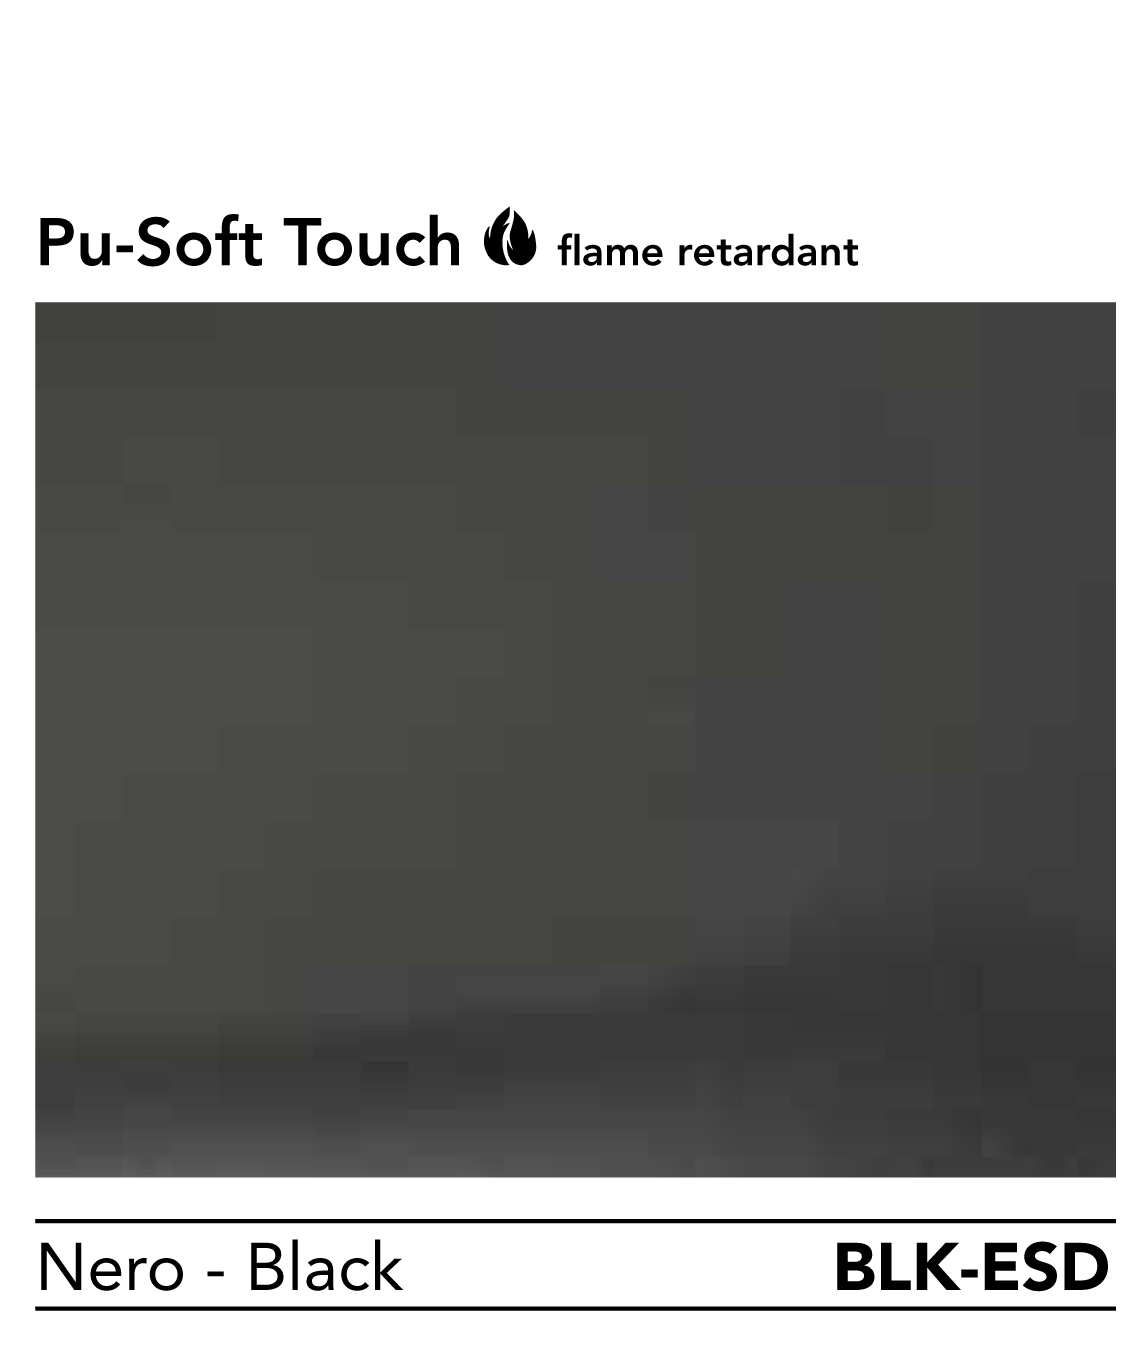 PUsoft Touch flame retardant – BLK-ESD Nero Black